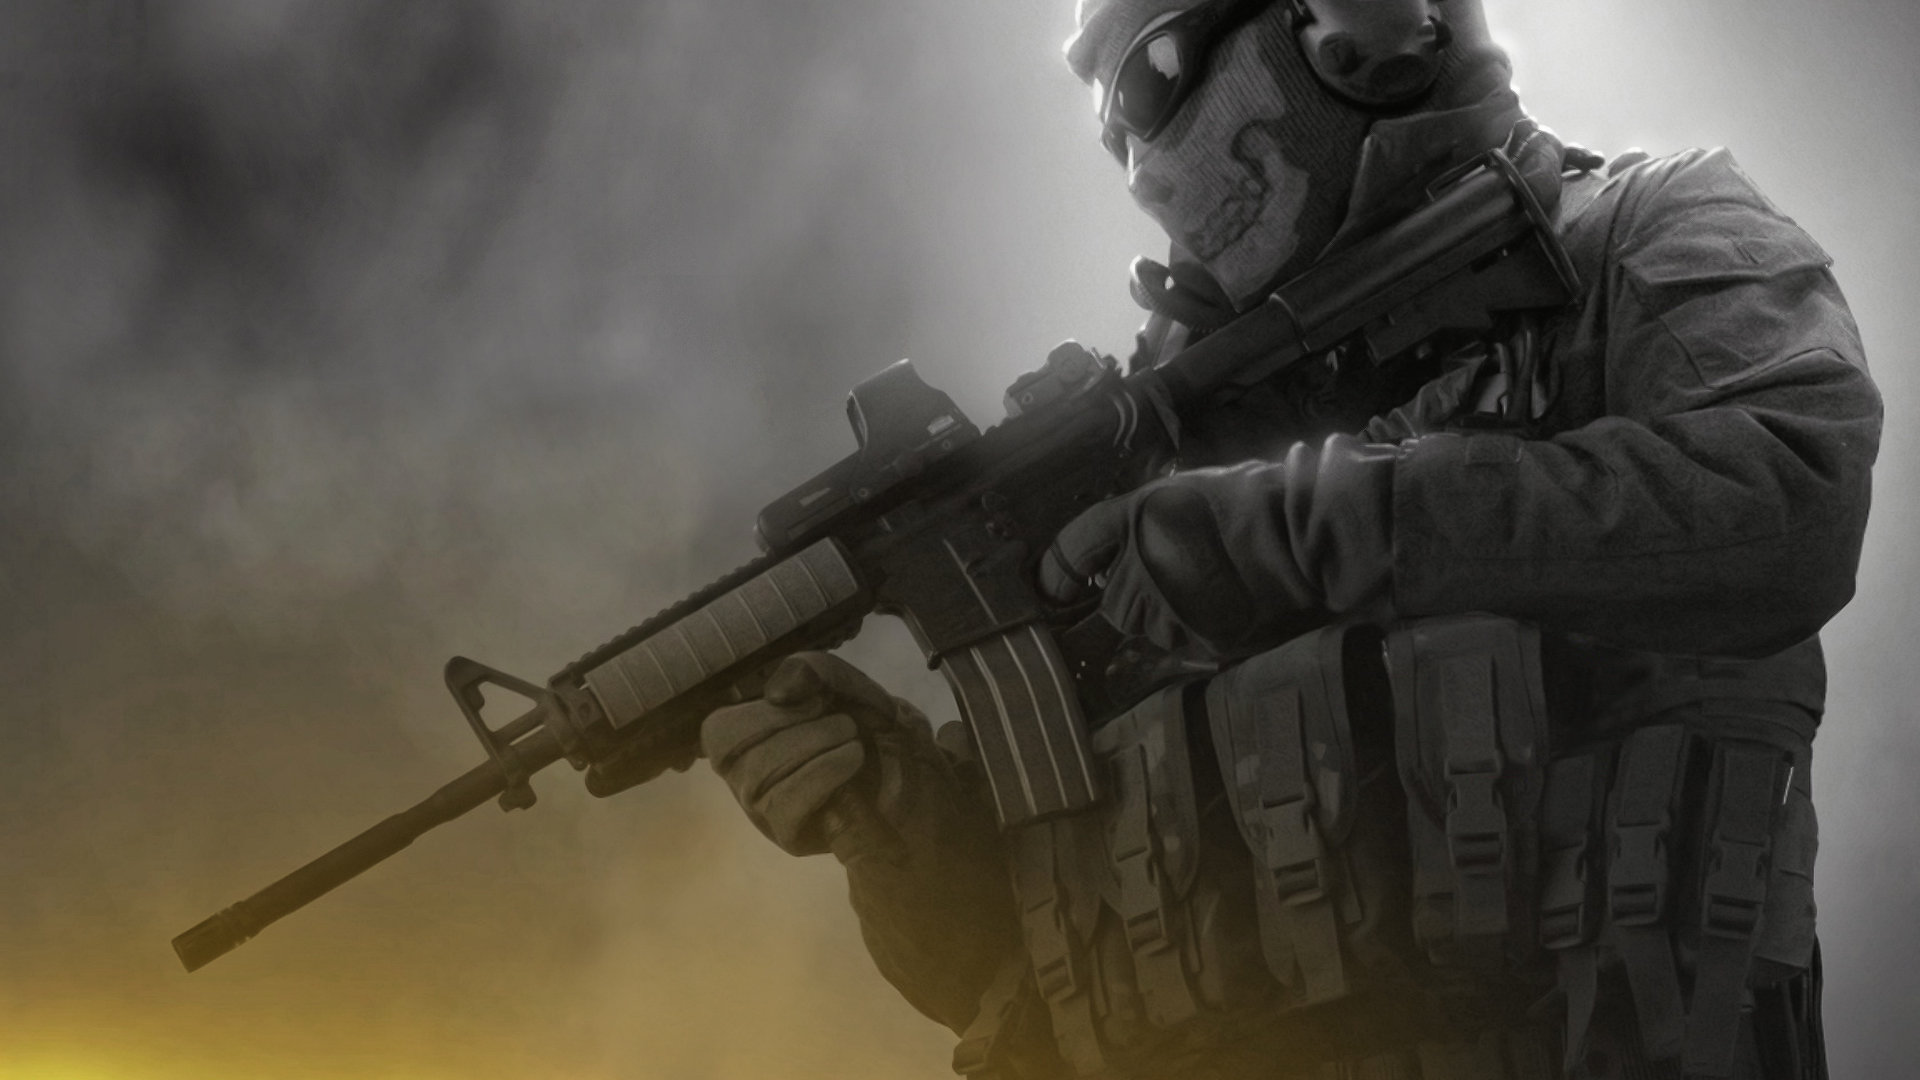 soldat wallpaper,gun,soldier,shooter game,movie,personal protective equipment